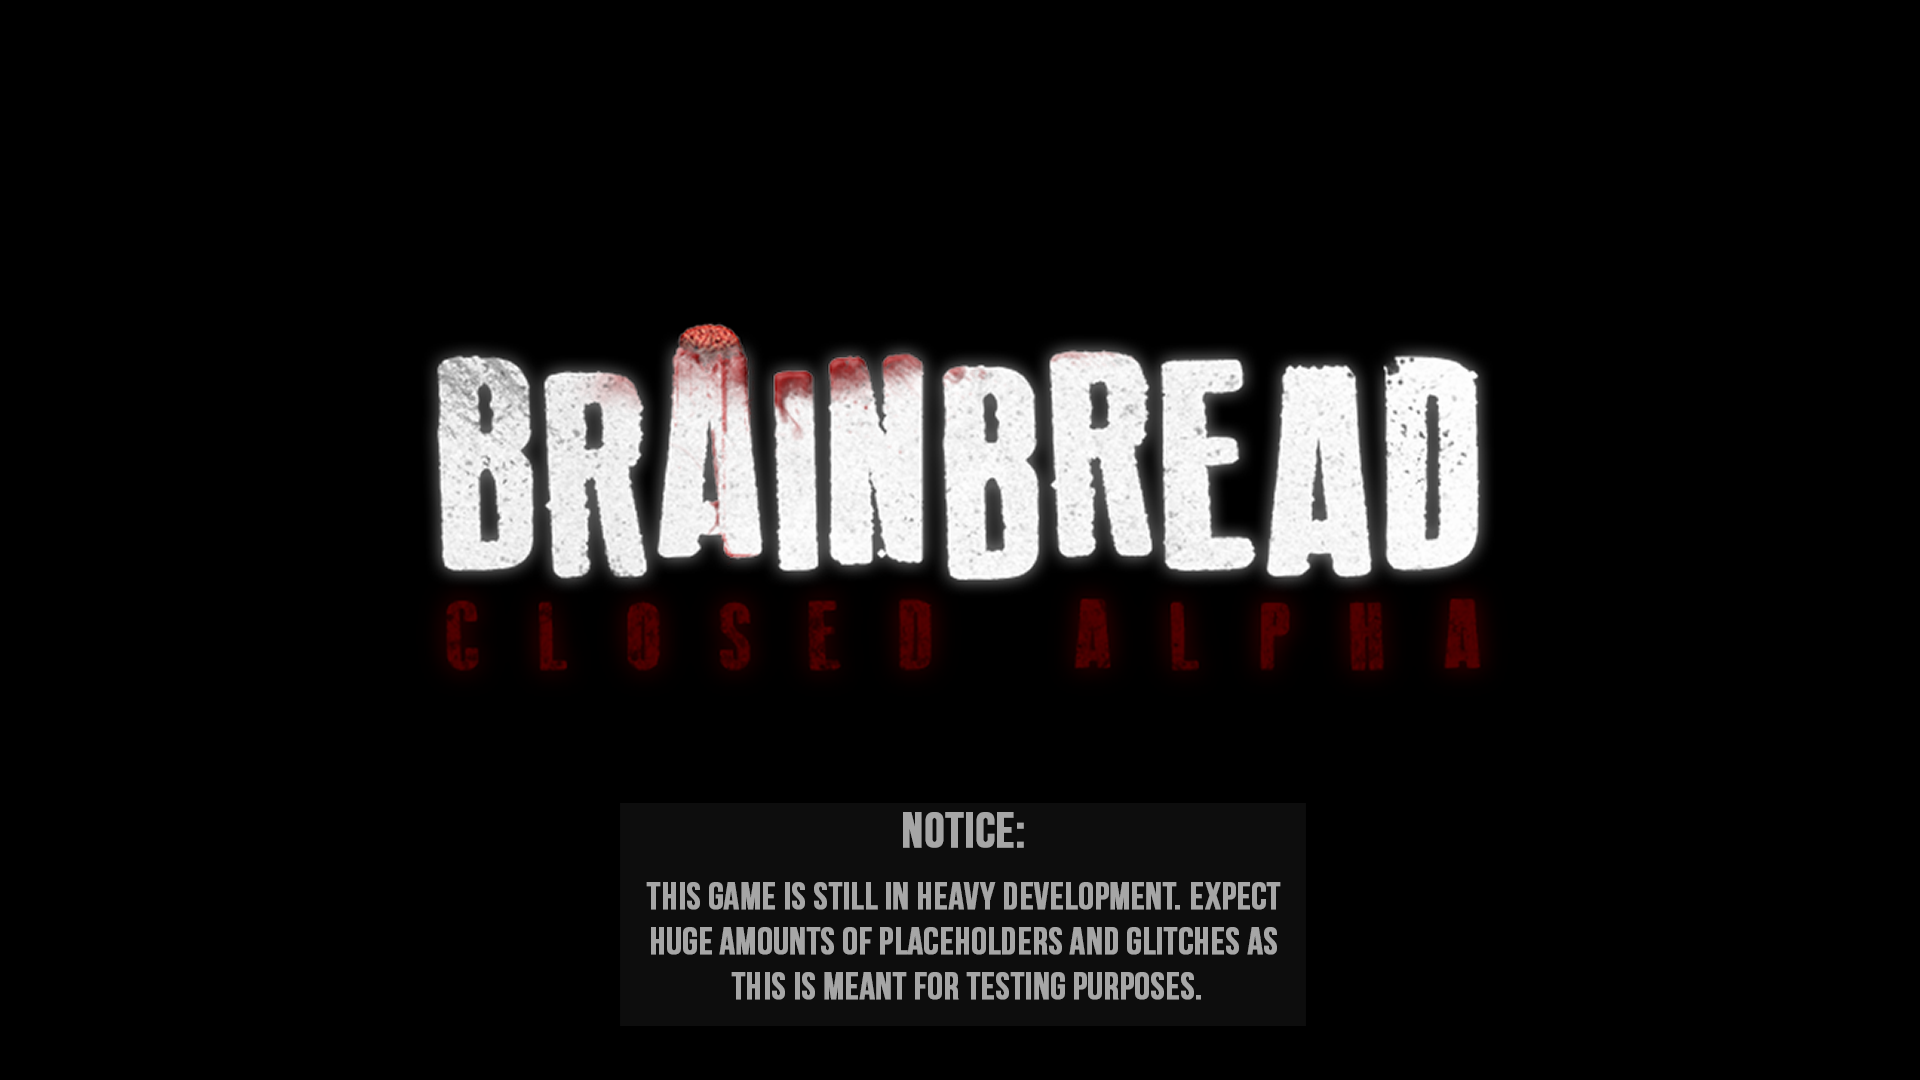 brainbread 2 early access